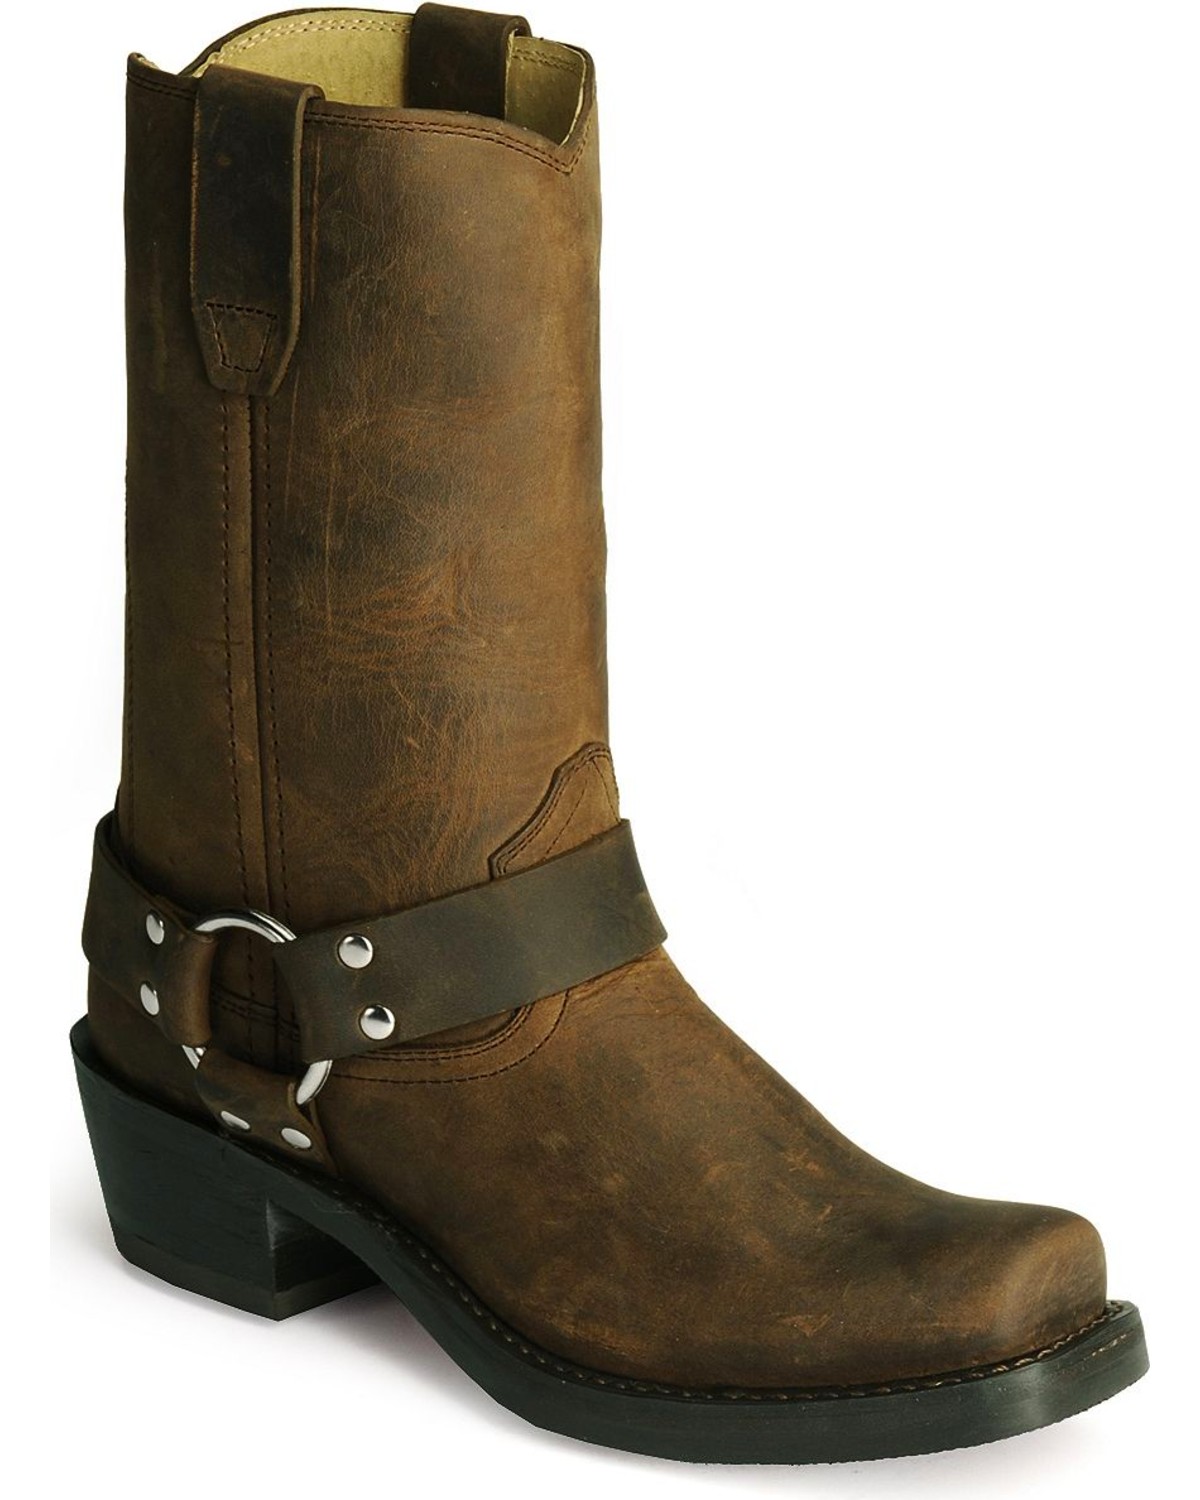 Durango Women's Harness Western Boots - Square Toe